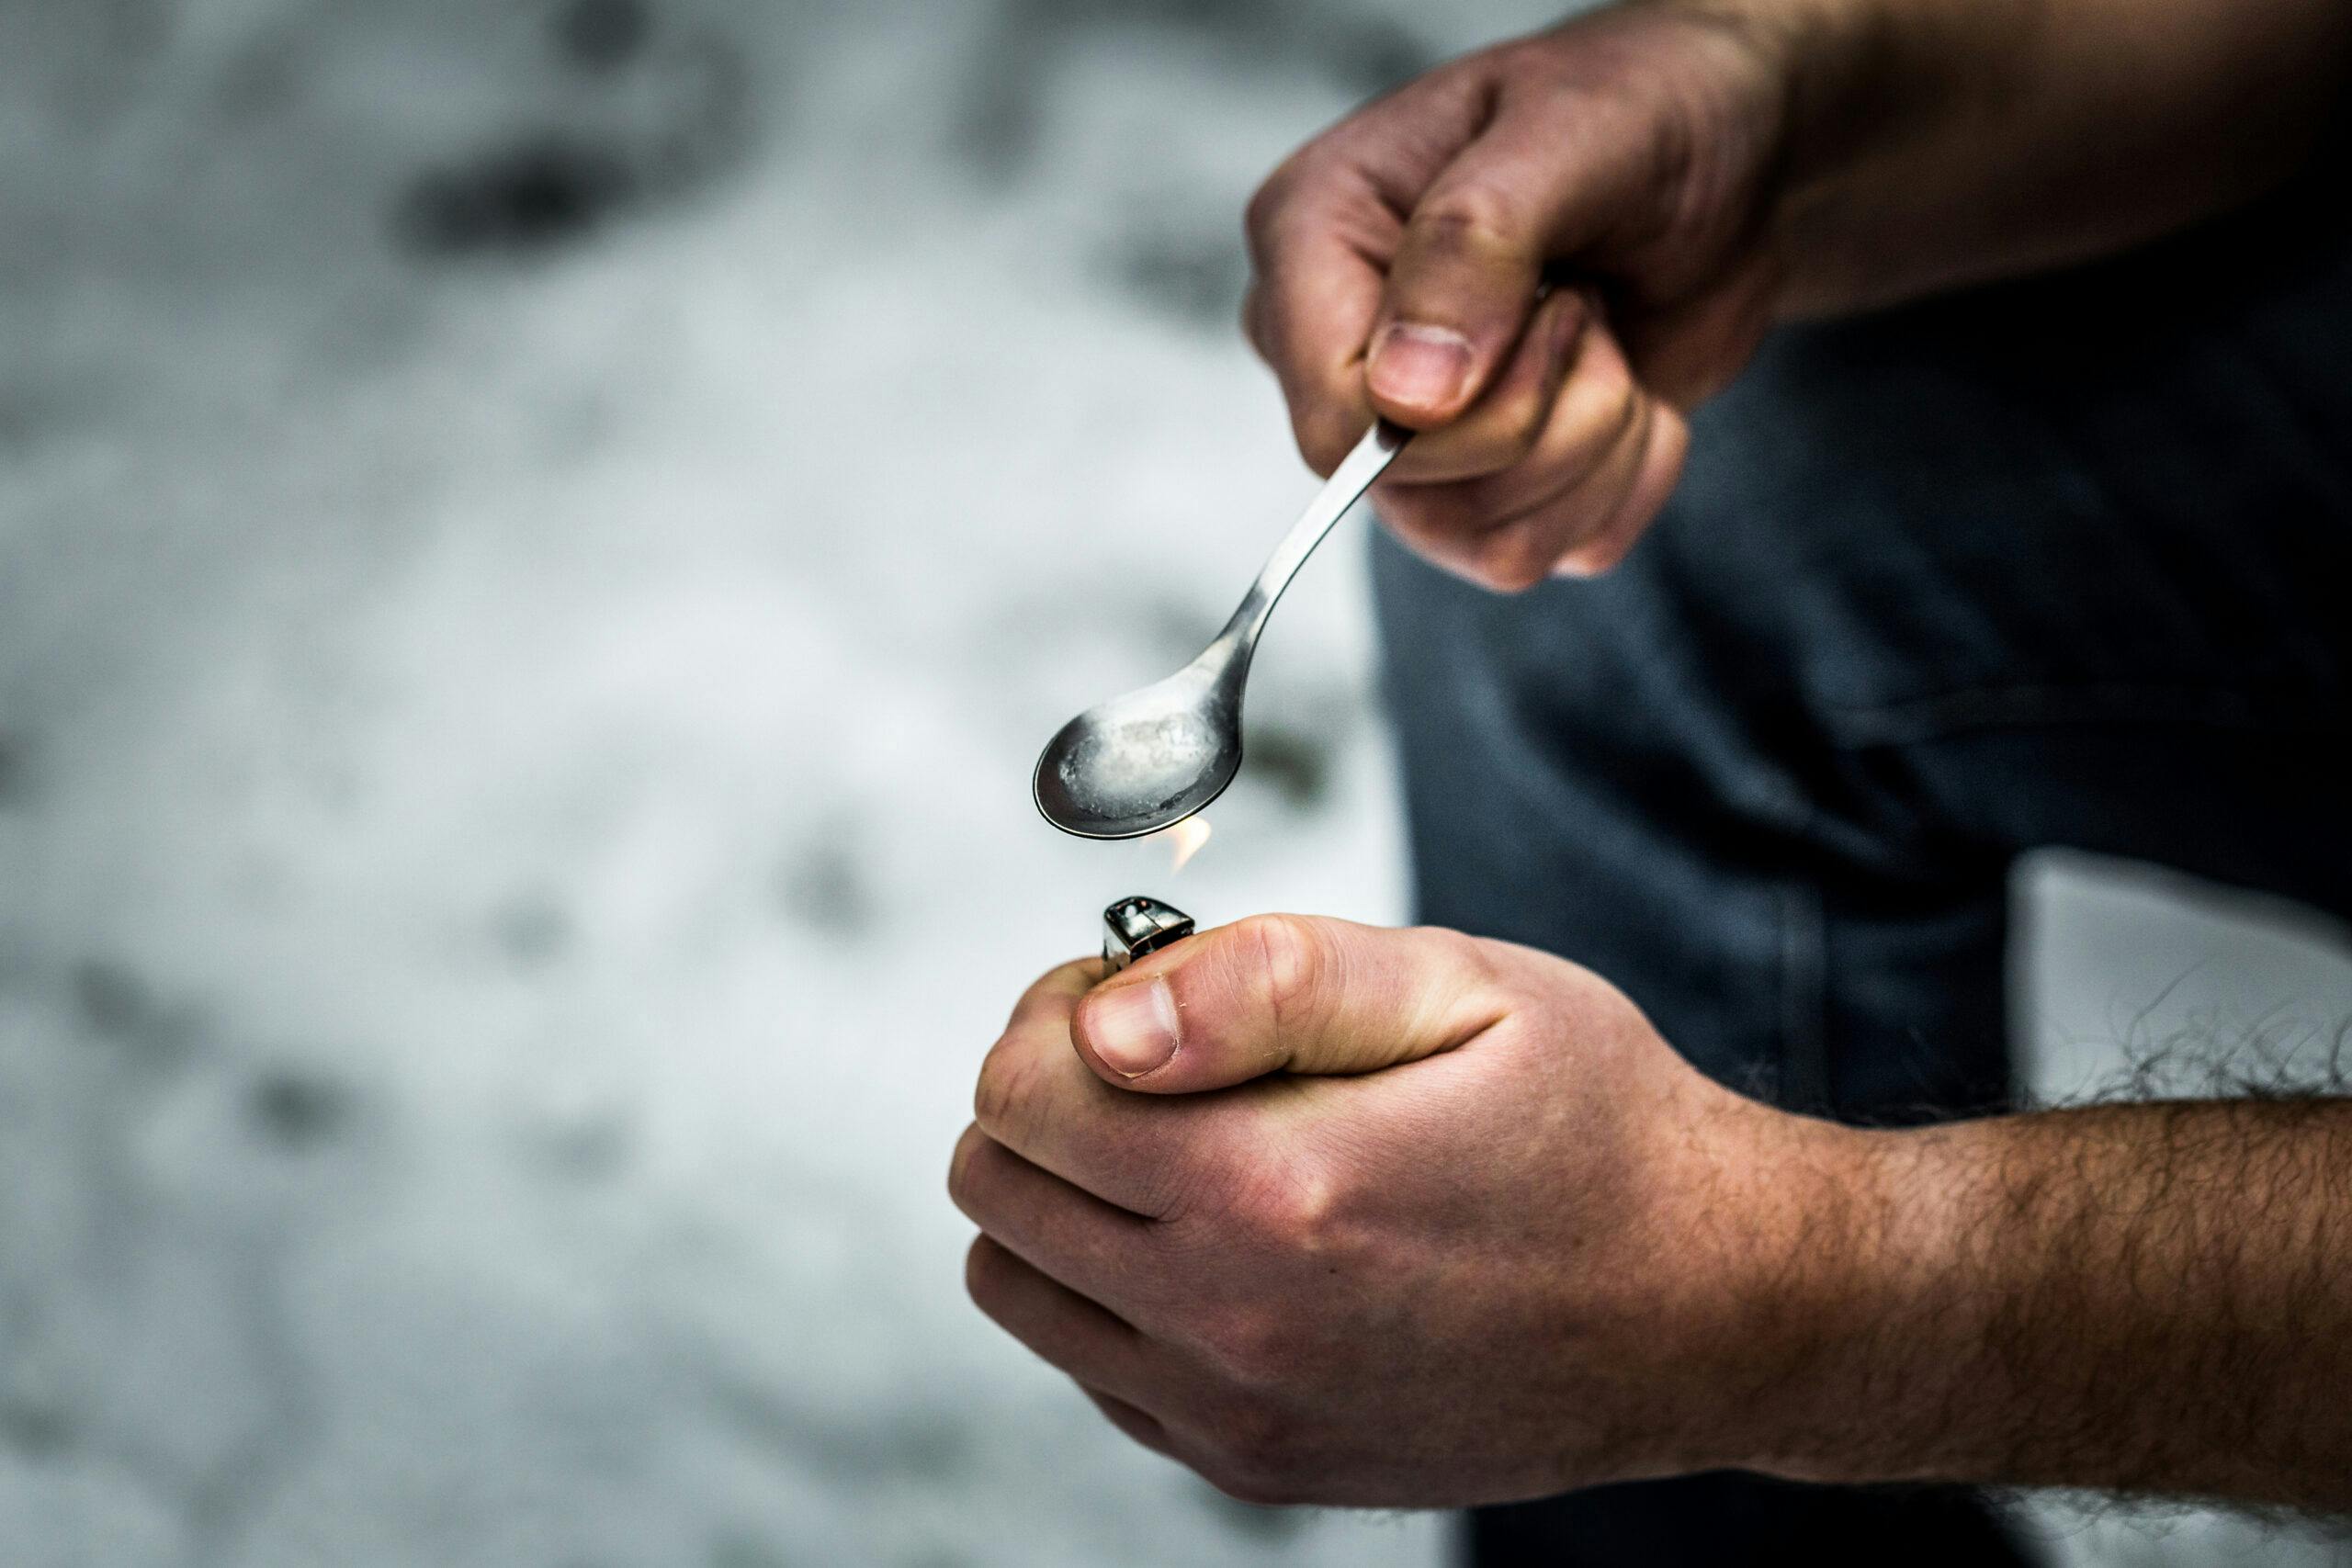 heroin addict spoon lighter